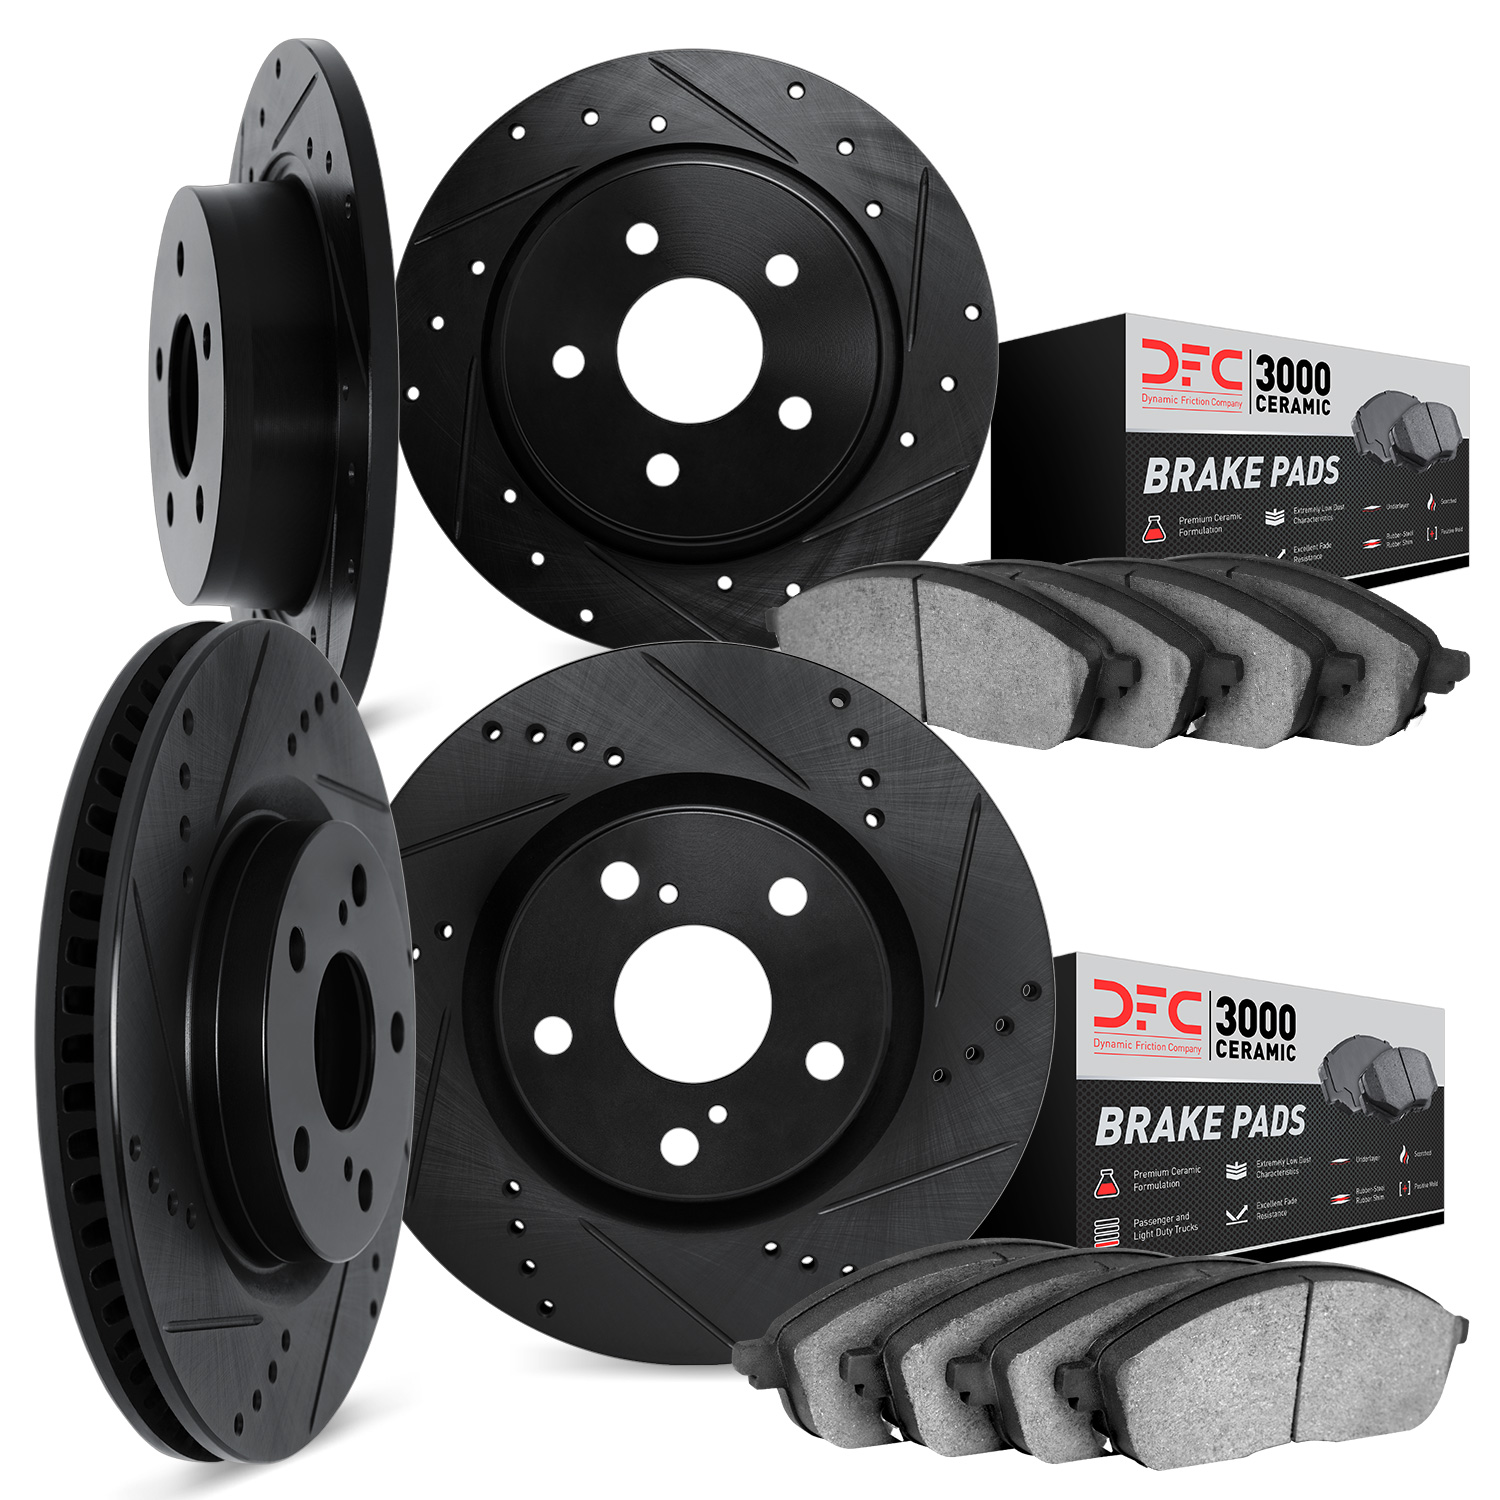 8304-75011 Drilled/Slotted Brake Rotors with 3000-Series Ceramic Brake Pads Kit [Black], 2009-2013 Lexus/Toyota/Scion, Position: